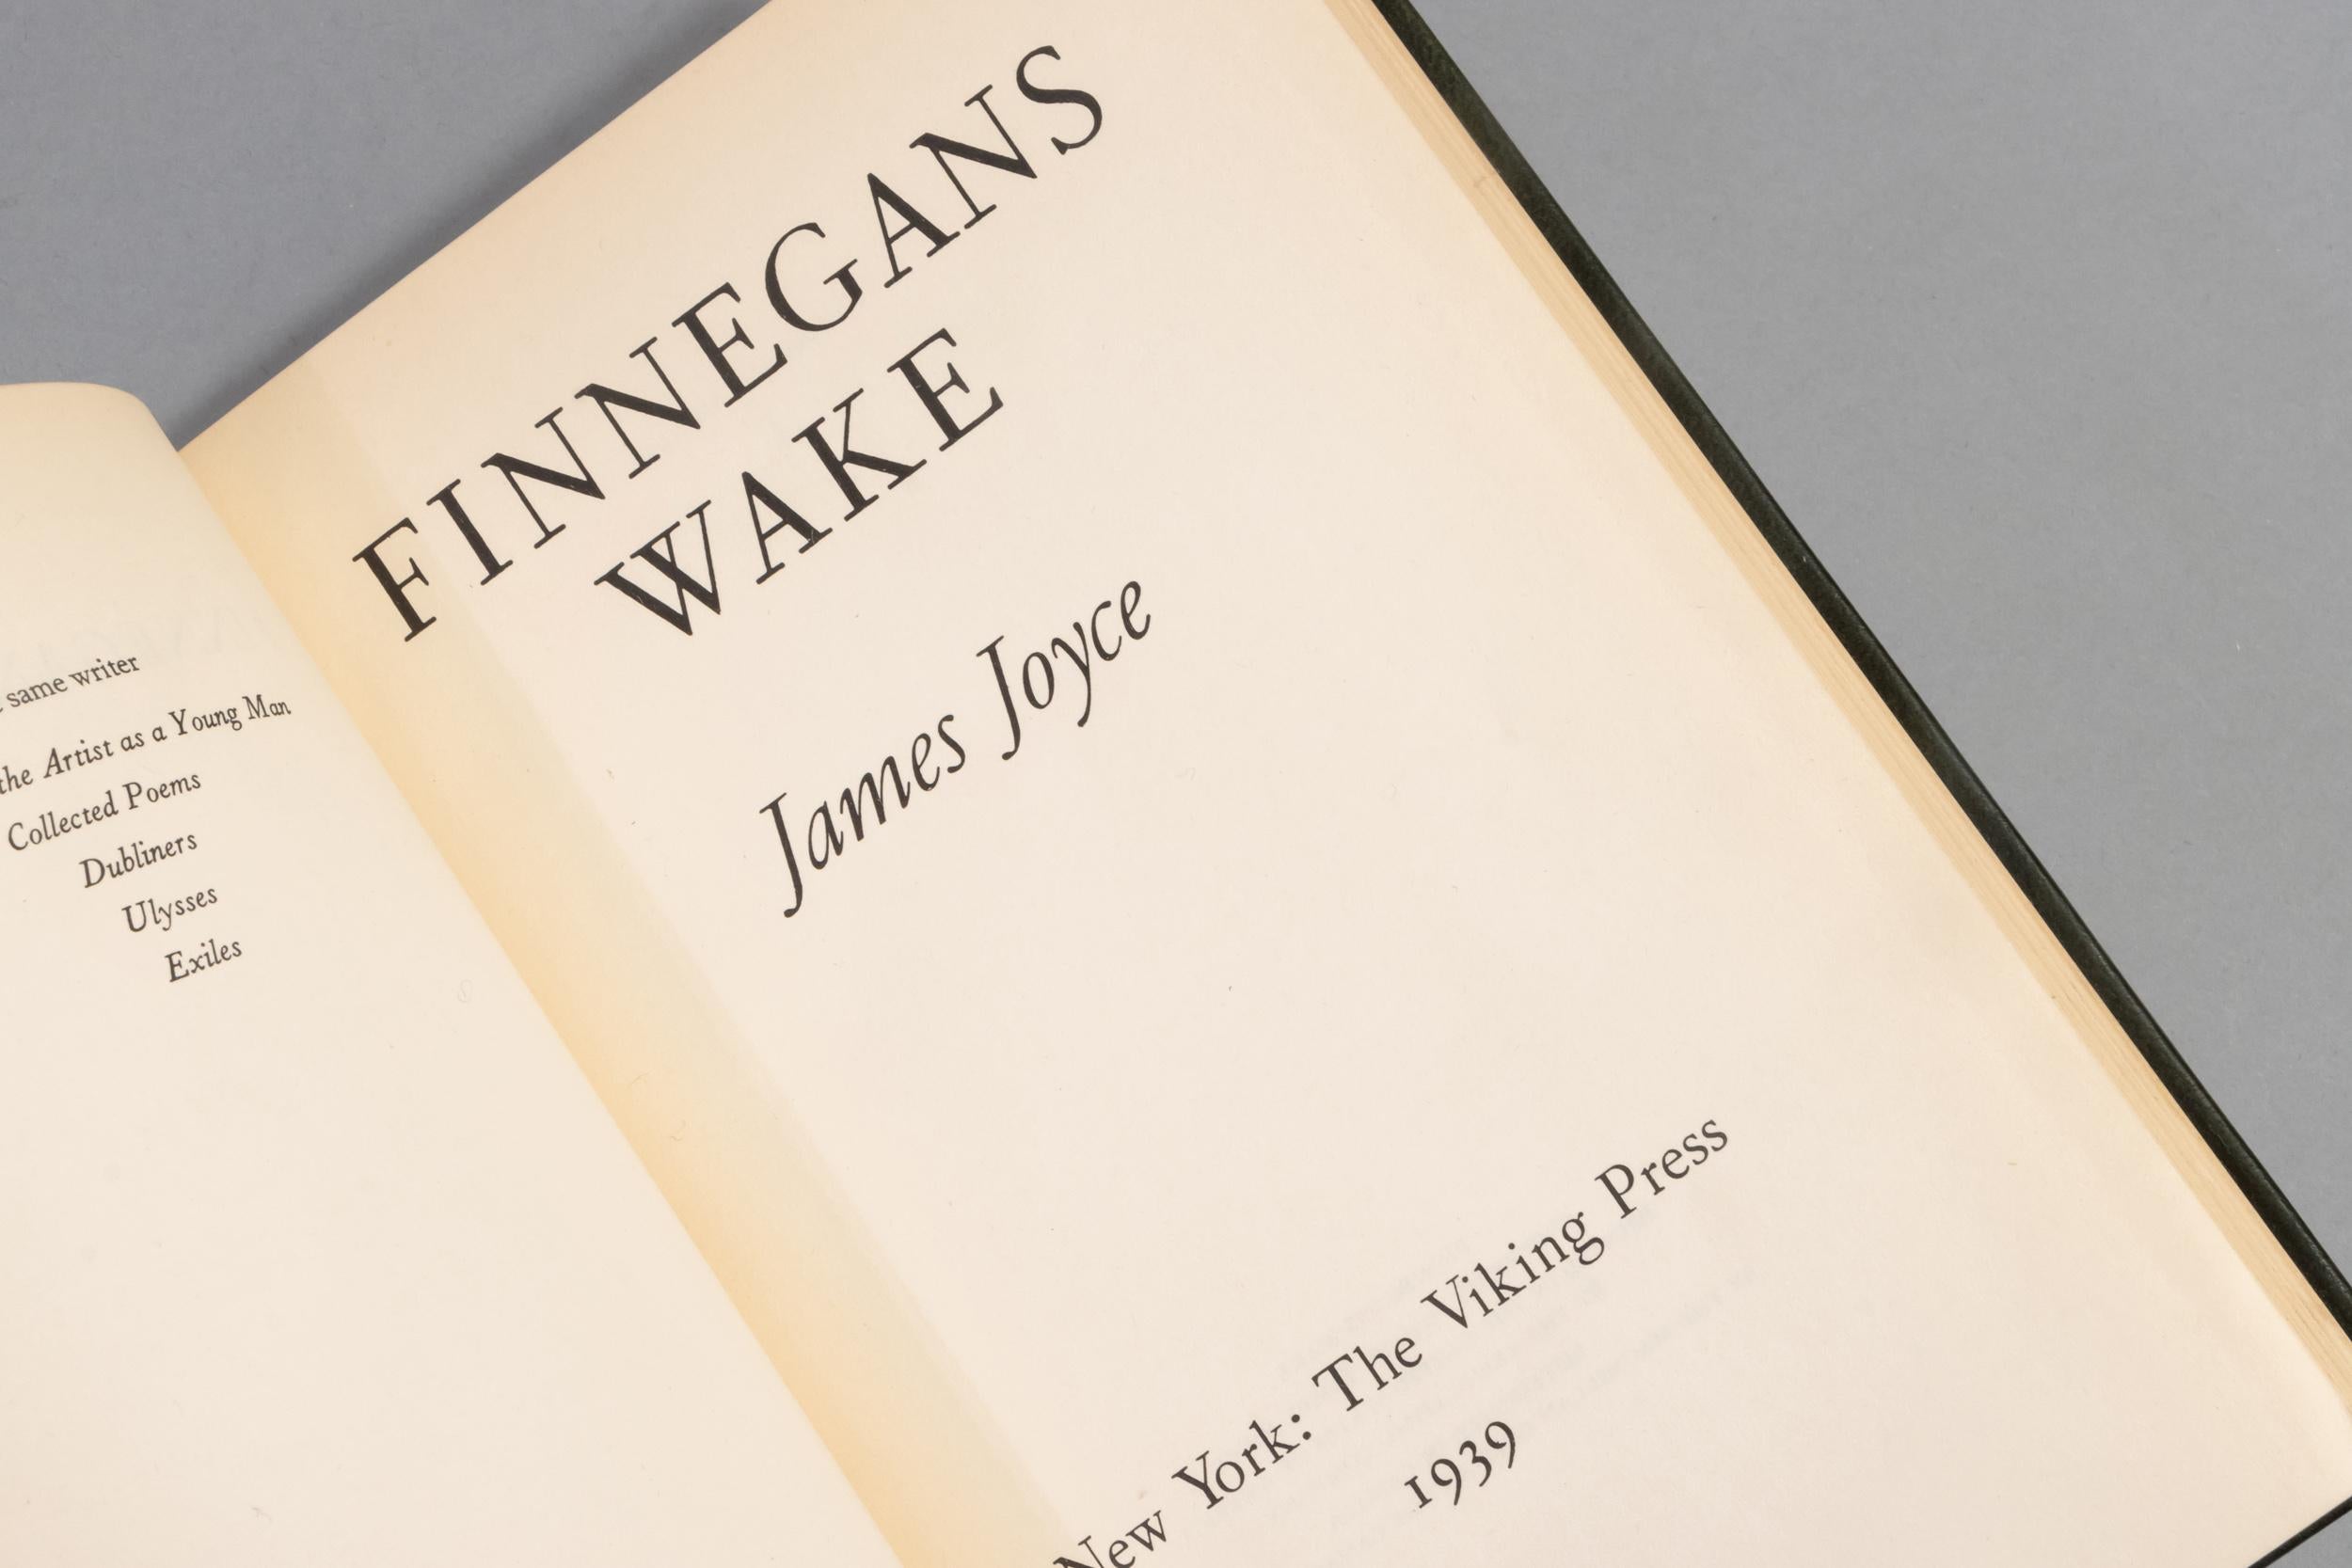 American 1 Volume. James Joyce, Finnegans Wake